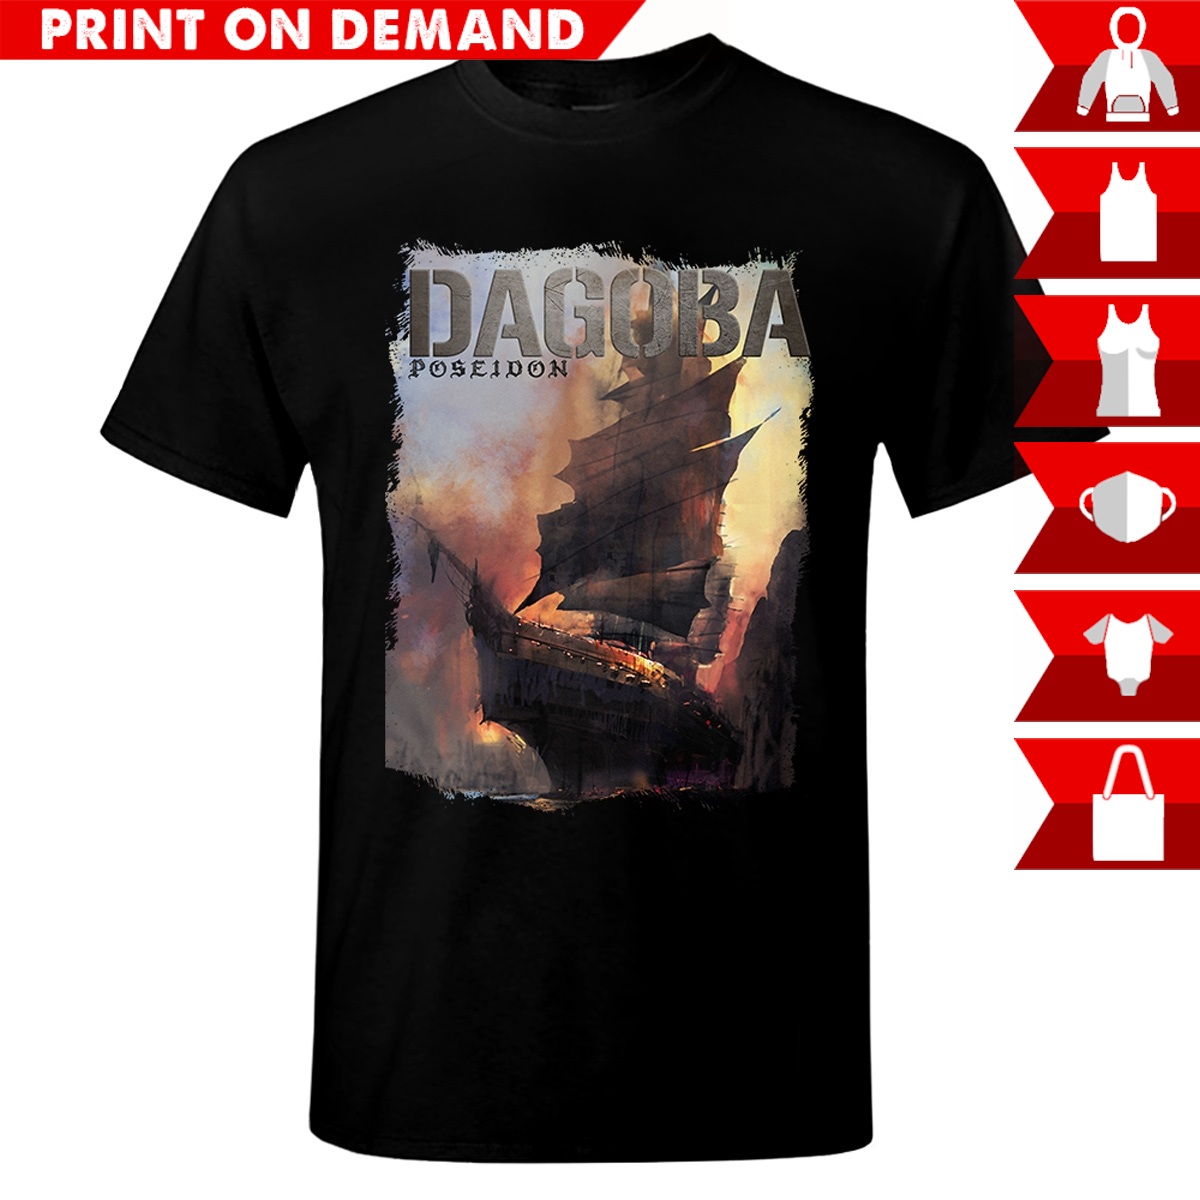 Dagoba - Poseidon - Print on demand